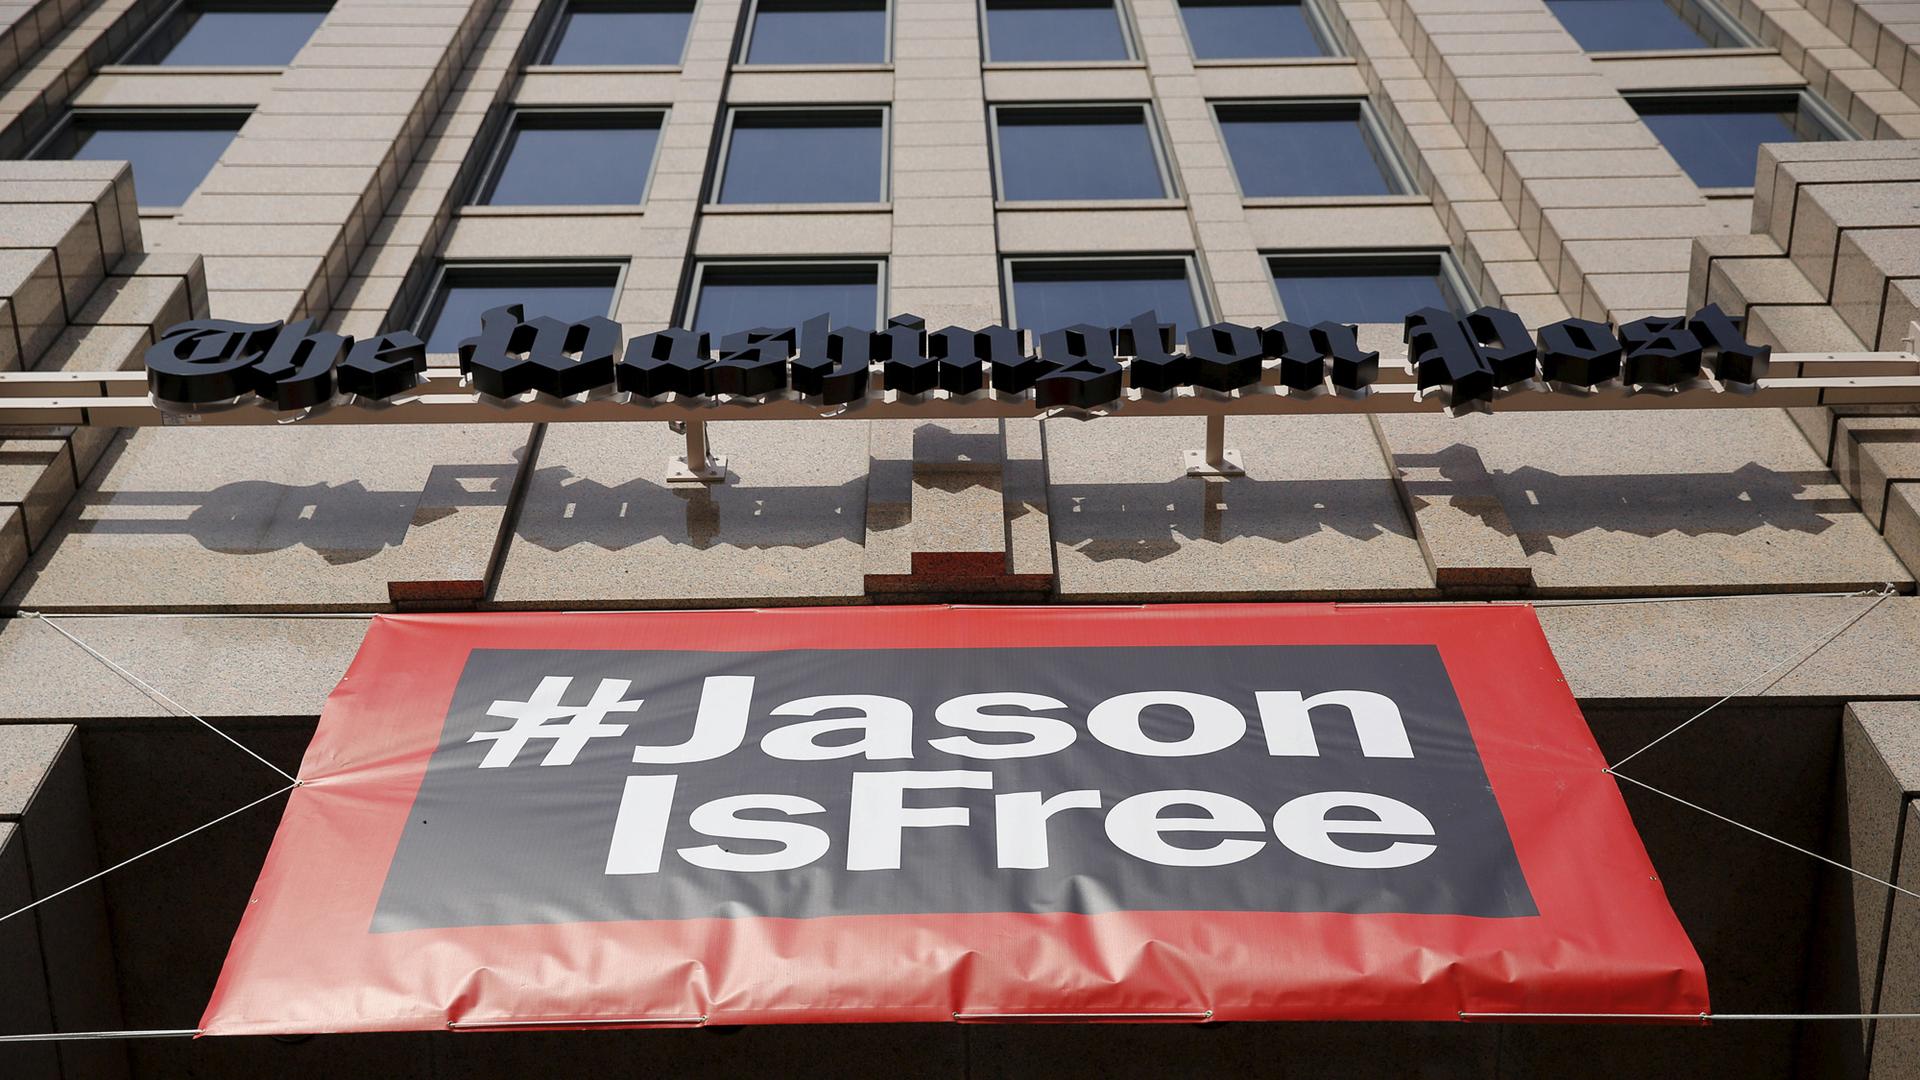 A large banner hangs below the Washington Post building reading #JasonisFree